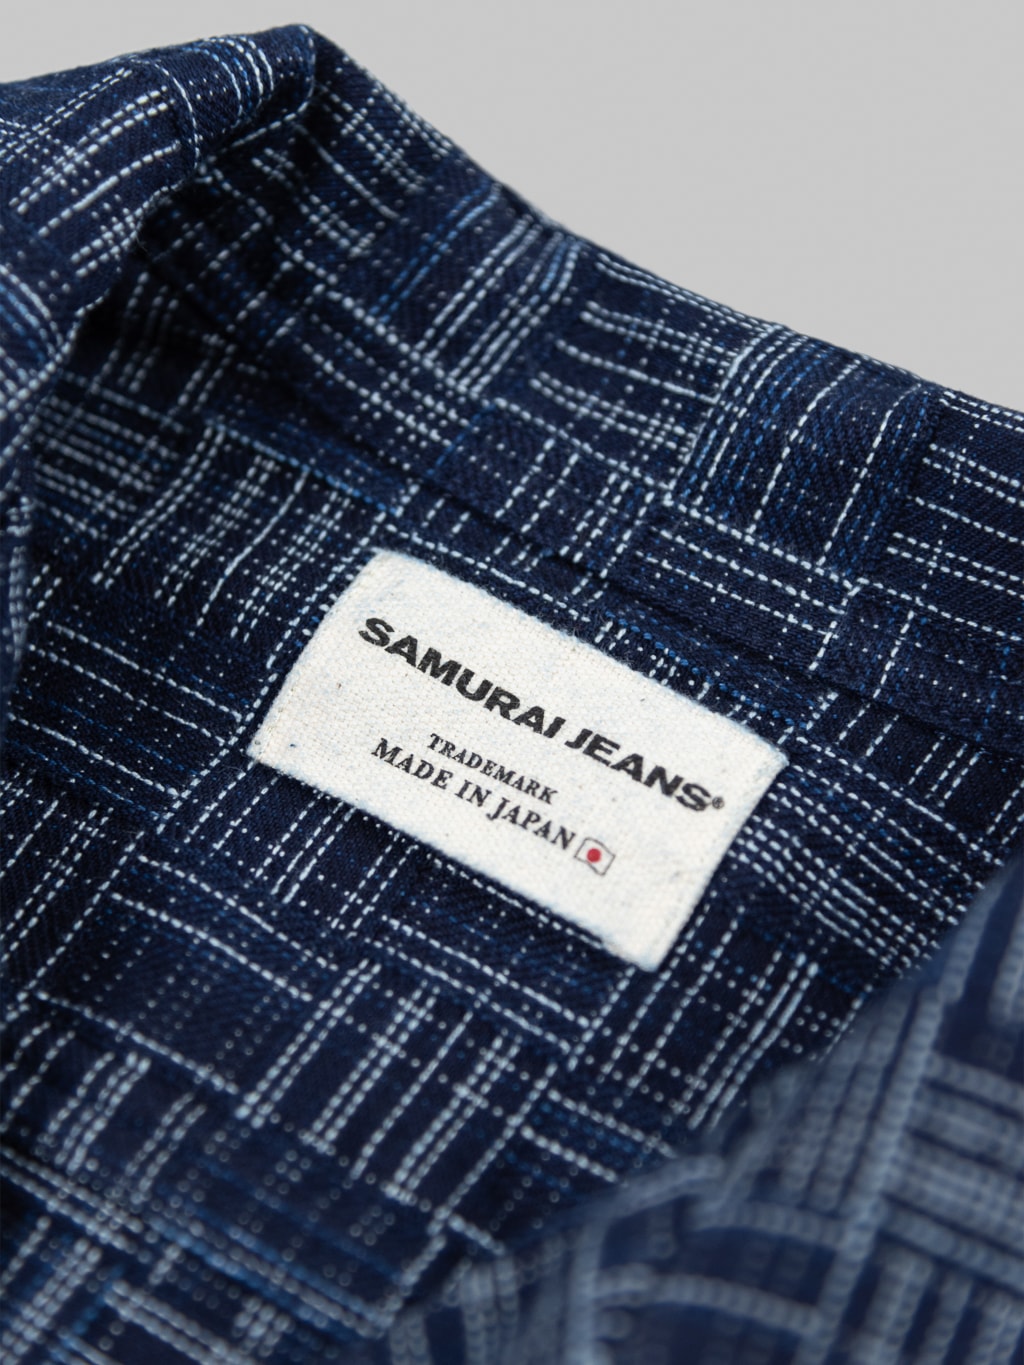 Samurai natural Indigo kasuri Work Shirt label